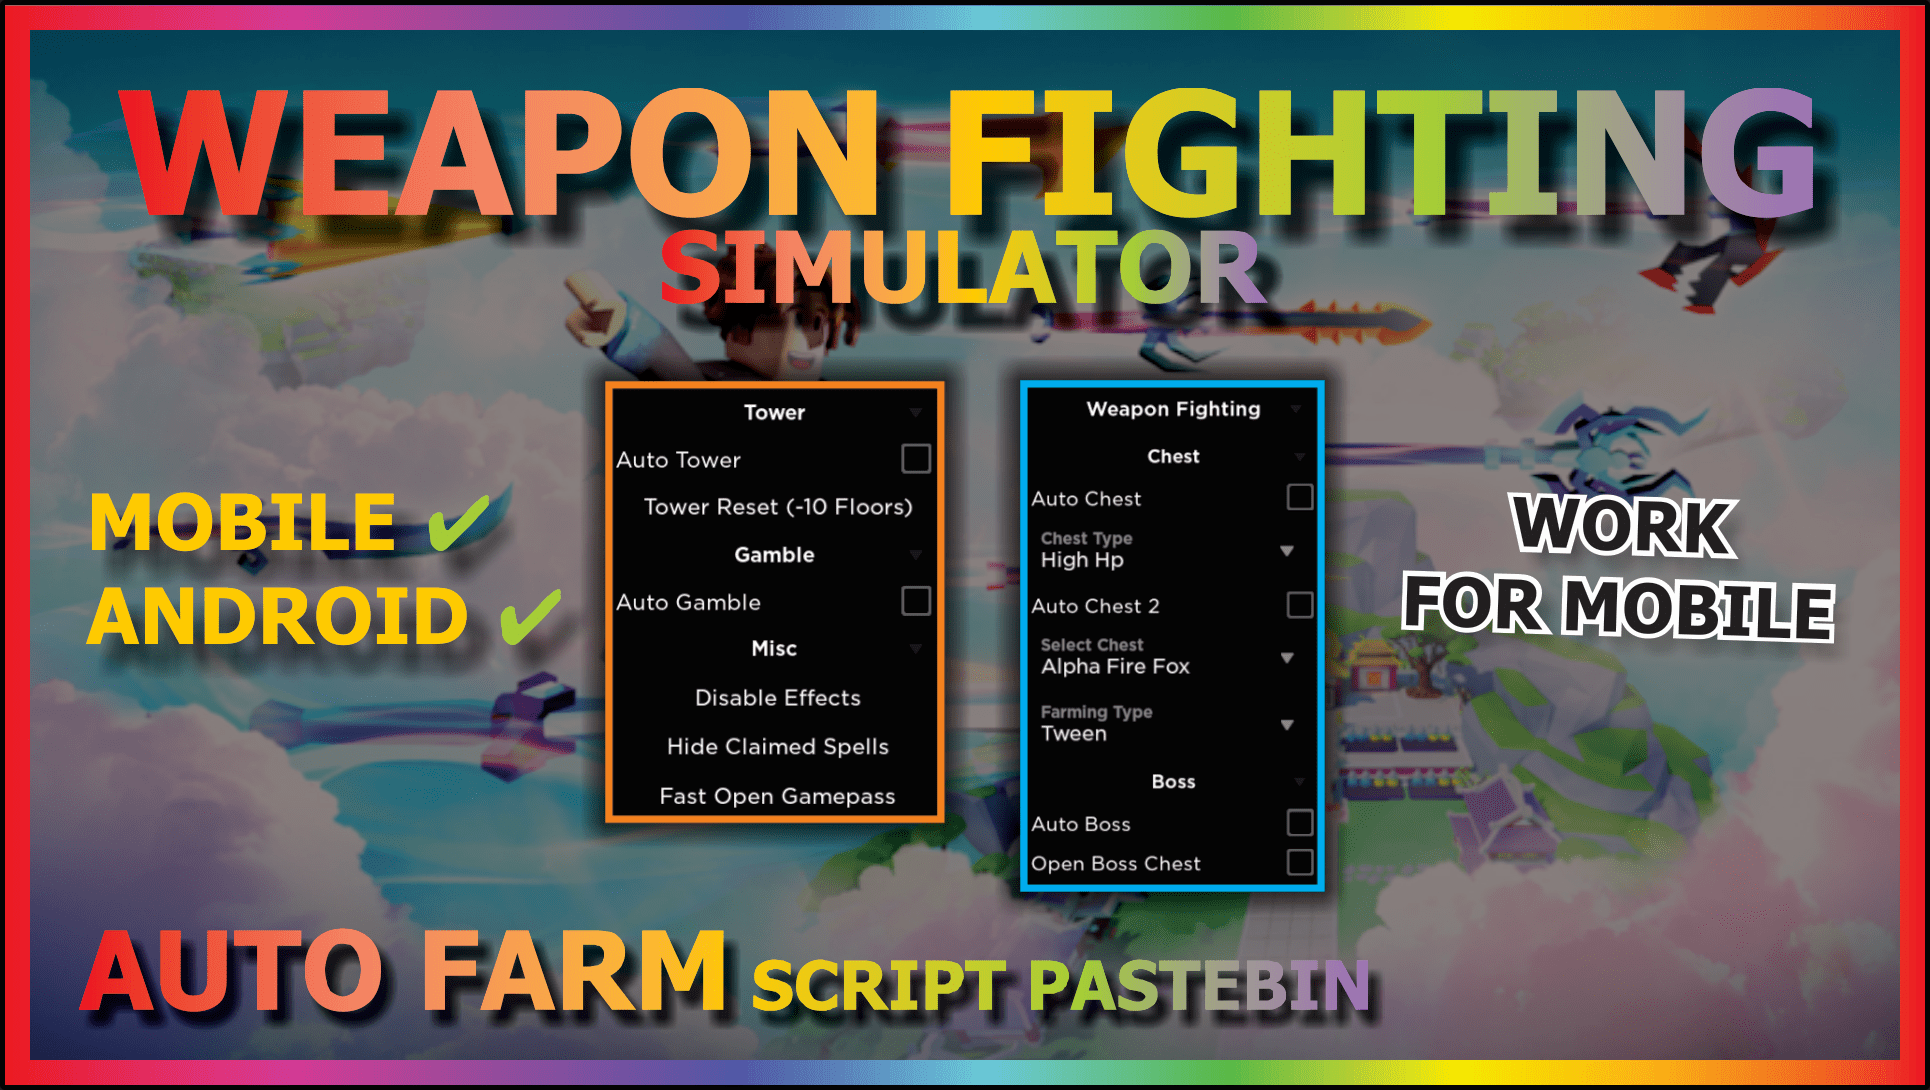 Weapon Fighting Simulator Script Pastebin Hacks - December 2023 